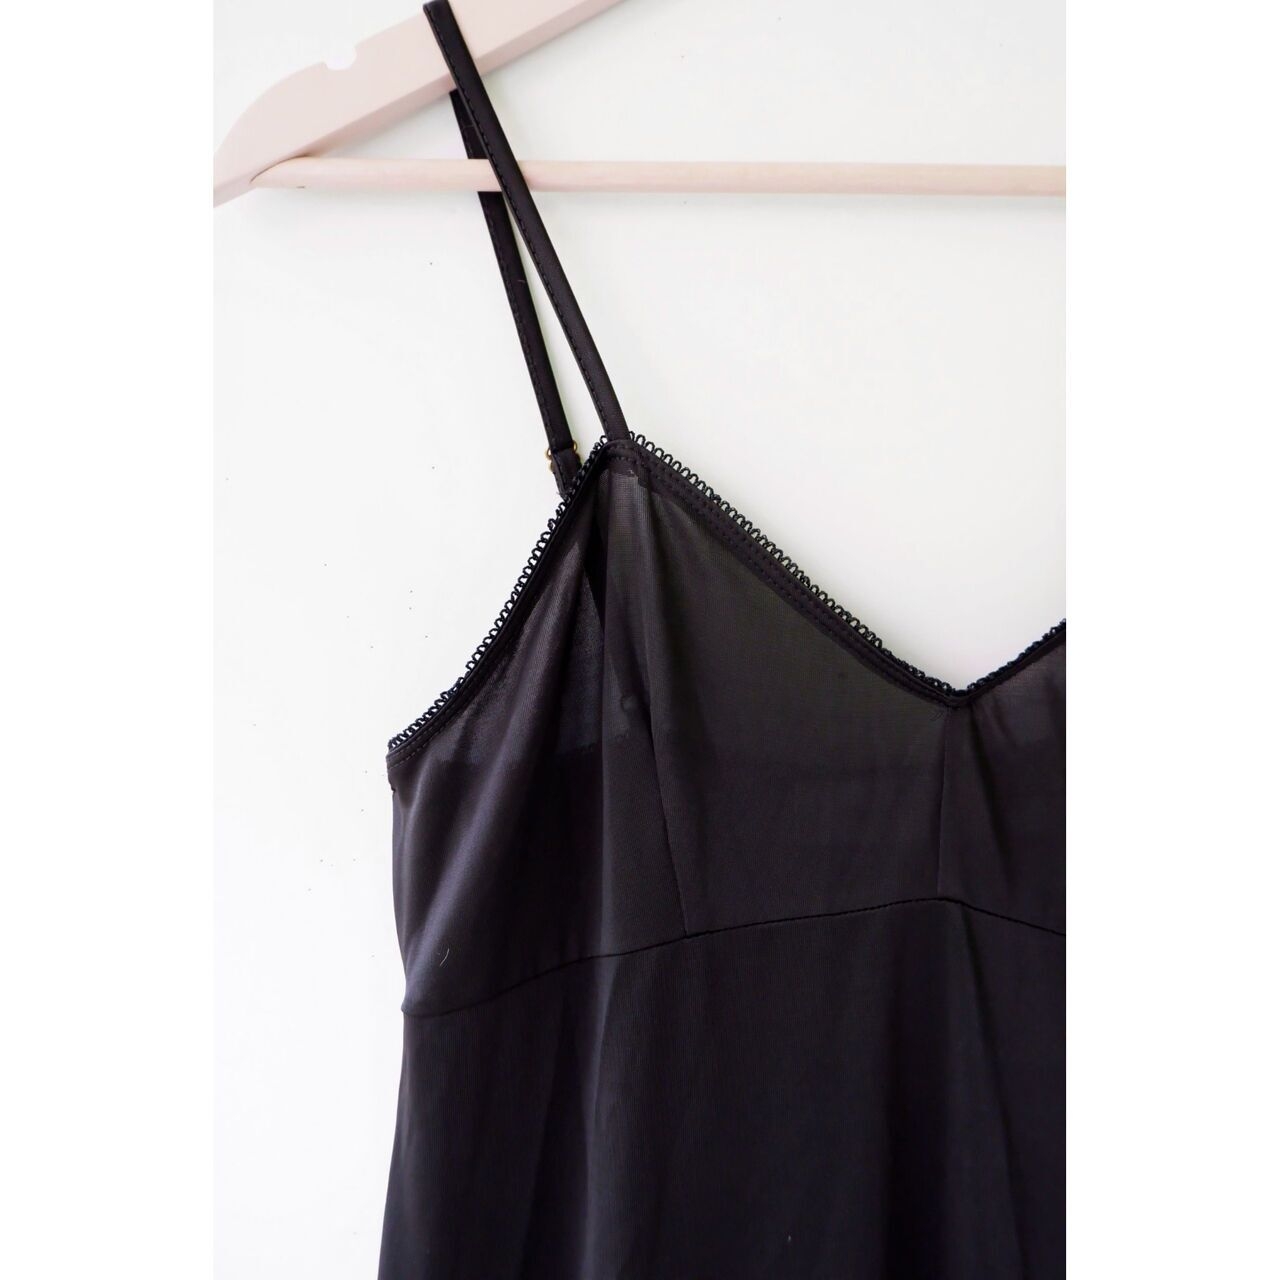 Zimmermann Black Sleeveless Dress